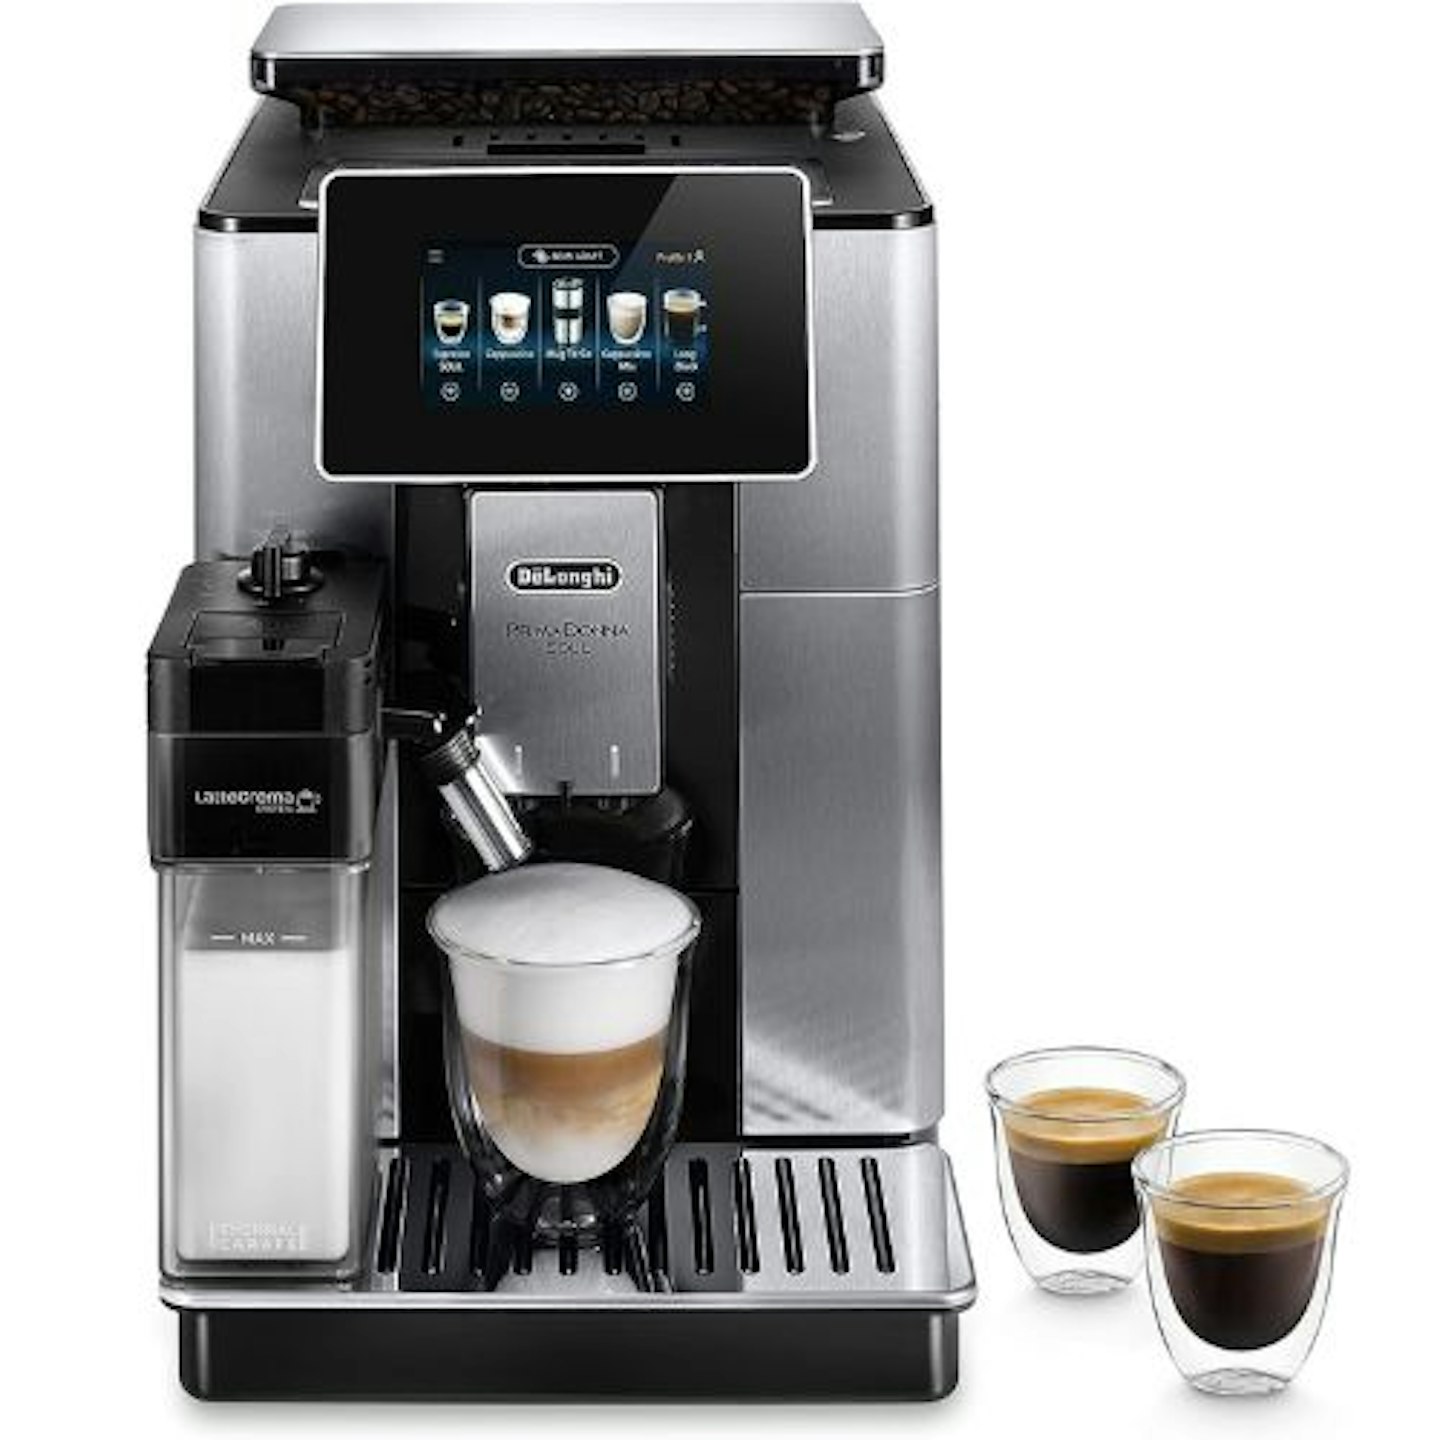 The best bean-to-cup coffee machines: De'Longhi Primadonna Soul